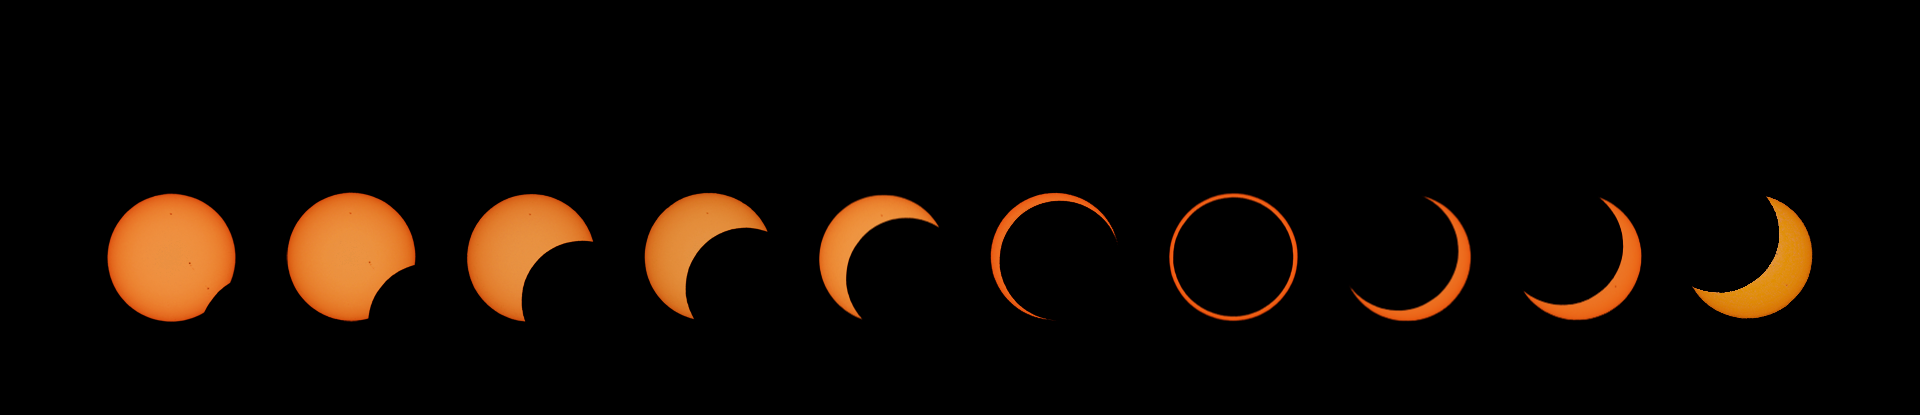 Solar Eclipse Banner Image